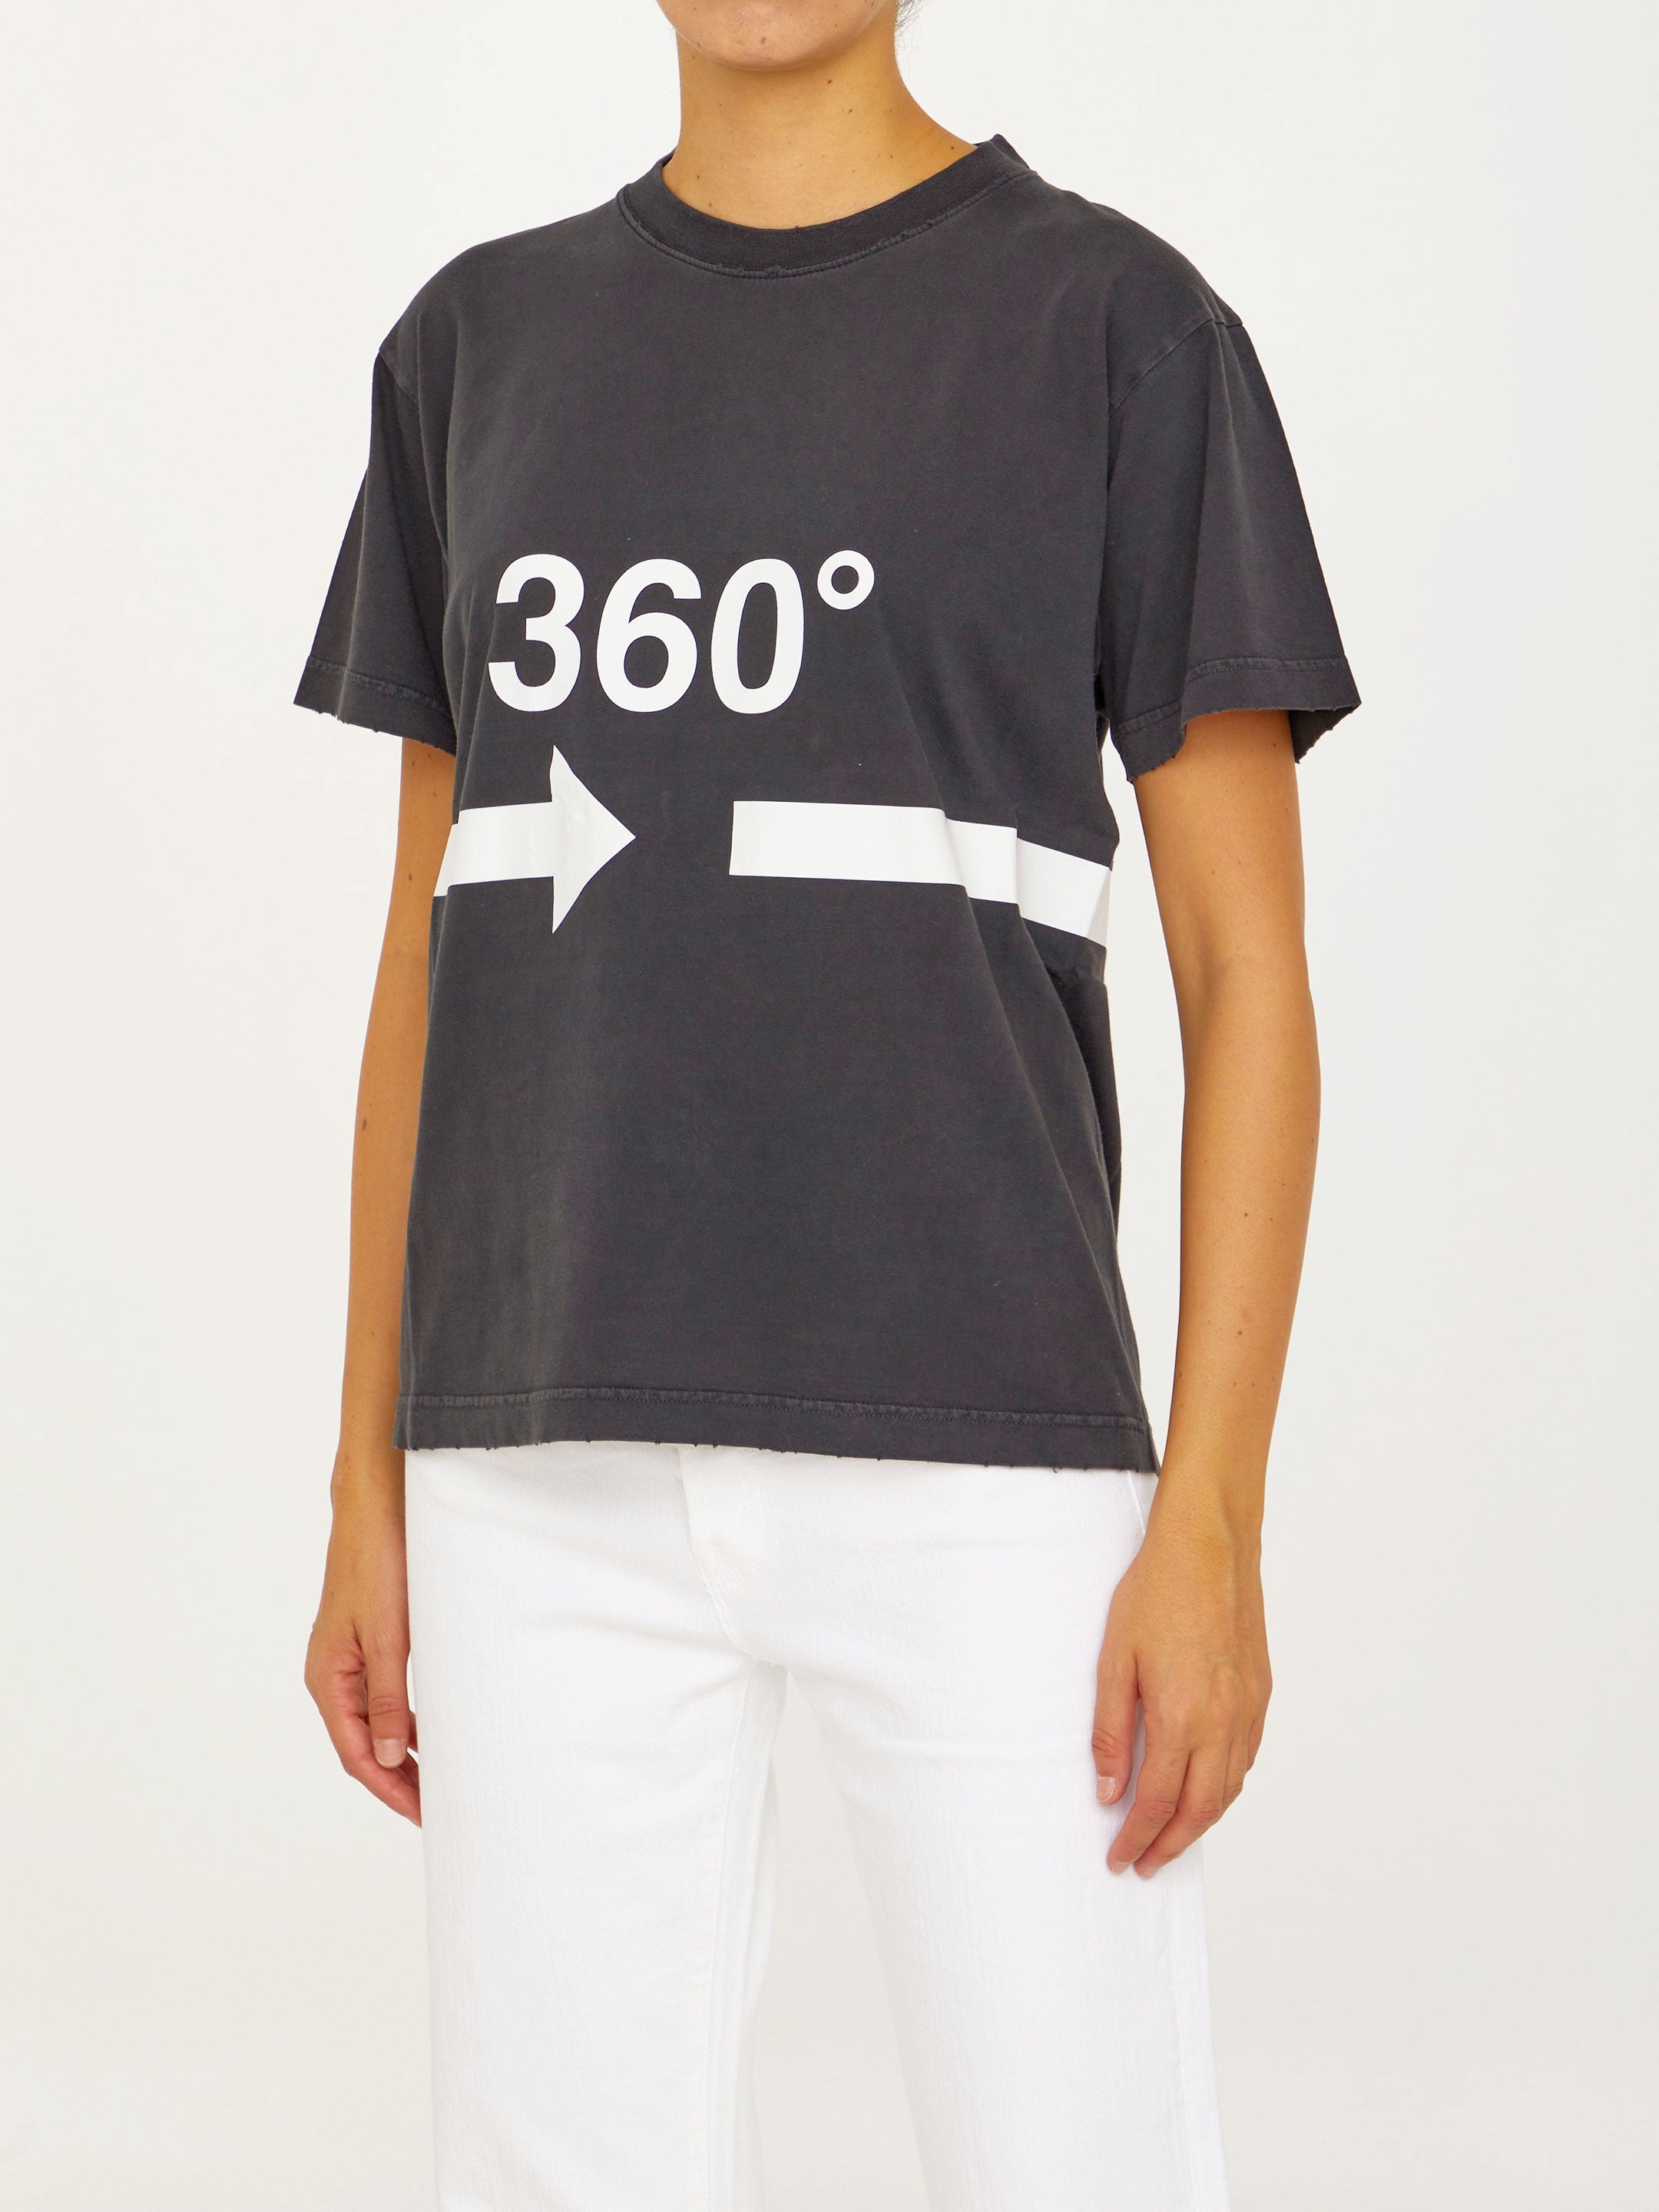 BALENCIAGA-OUTLET-SALE-360deg-t-shirt-Shirts-ARCHIVE-COLLECTION-2.jpg